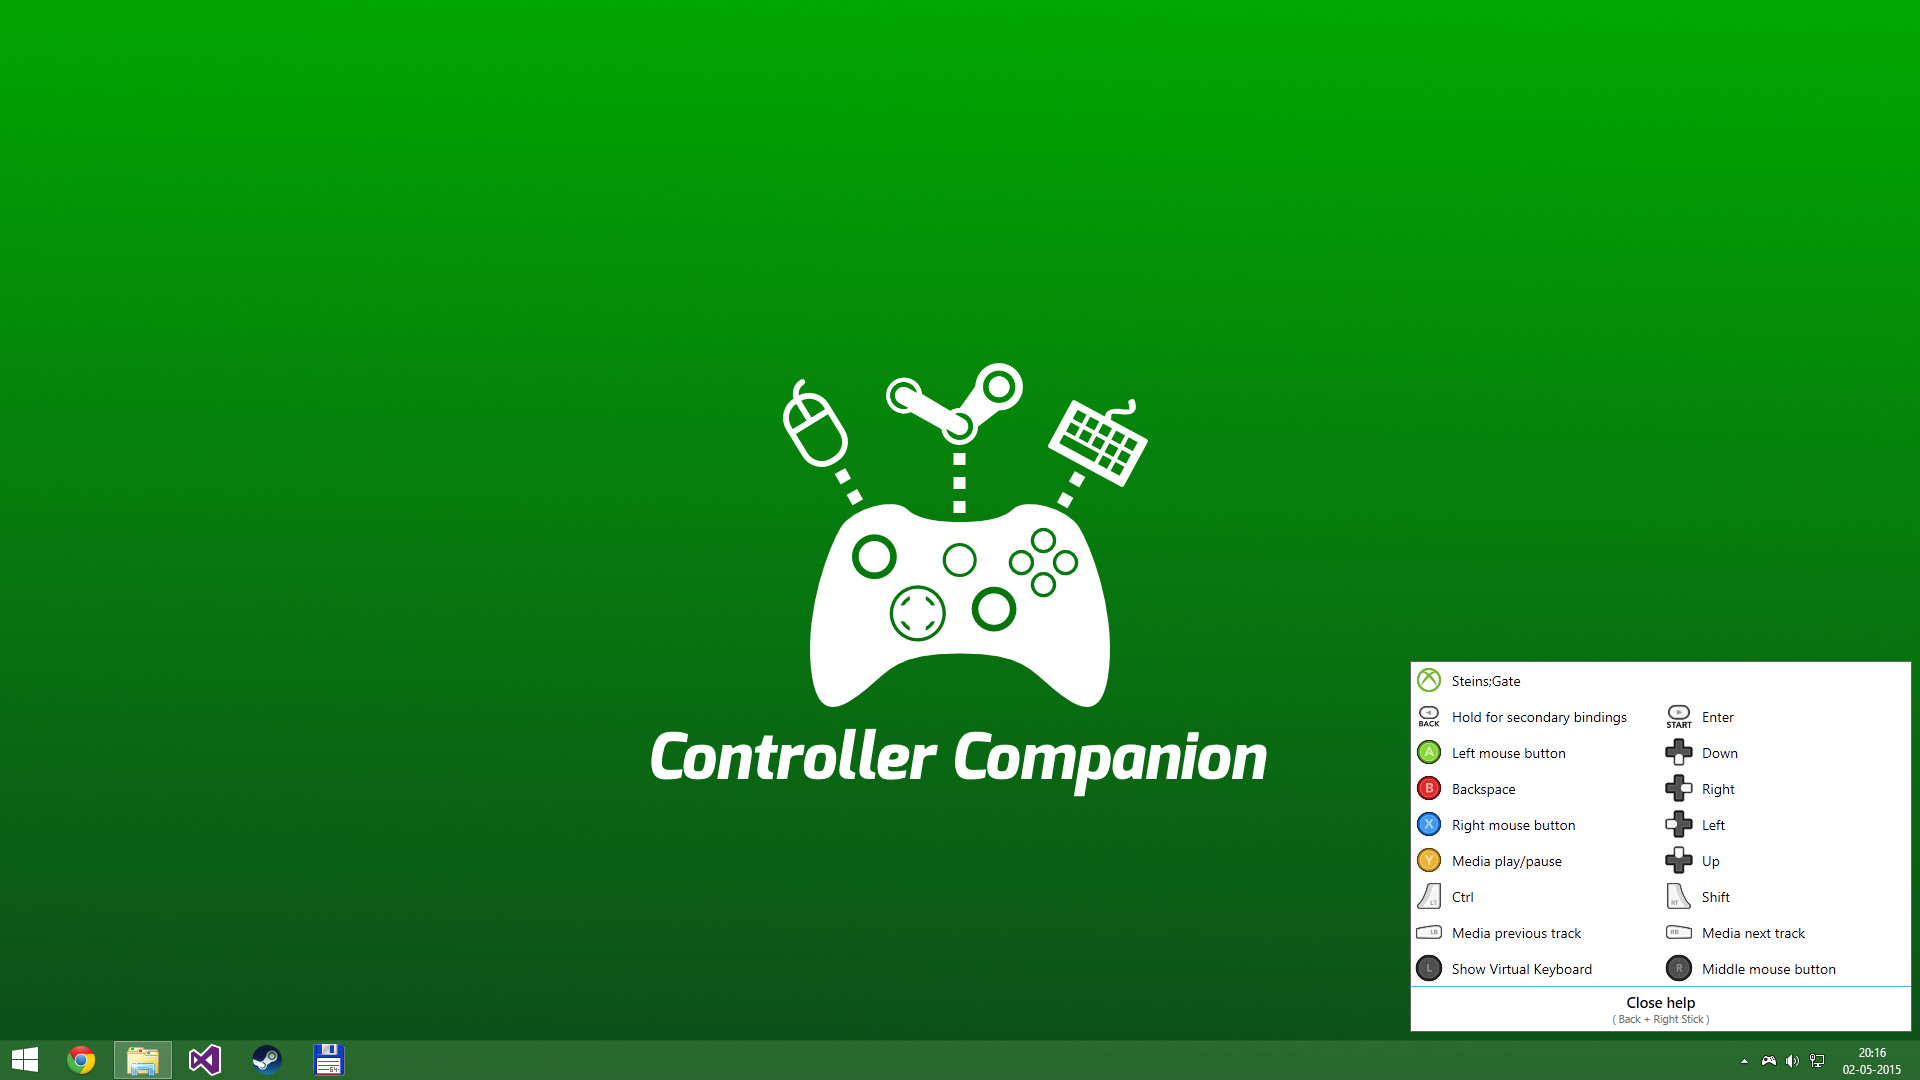 gamepad companion support